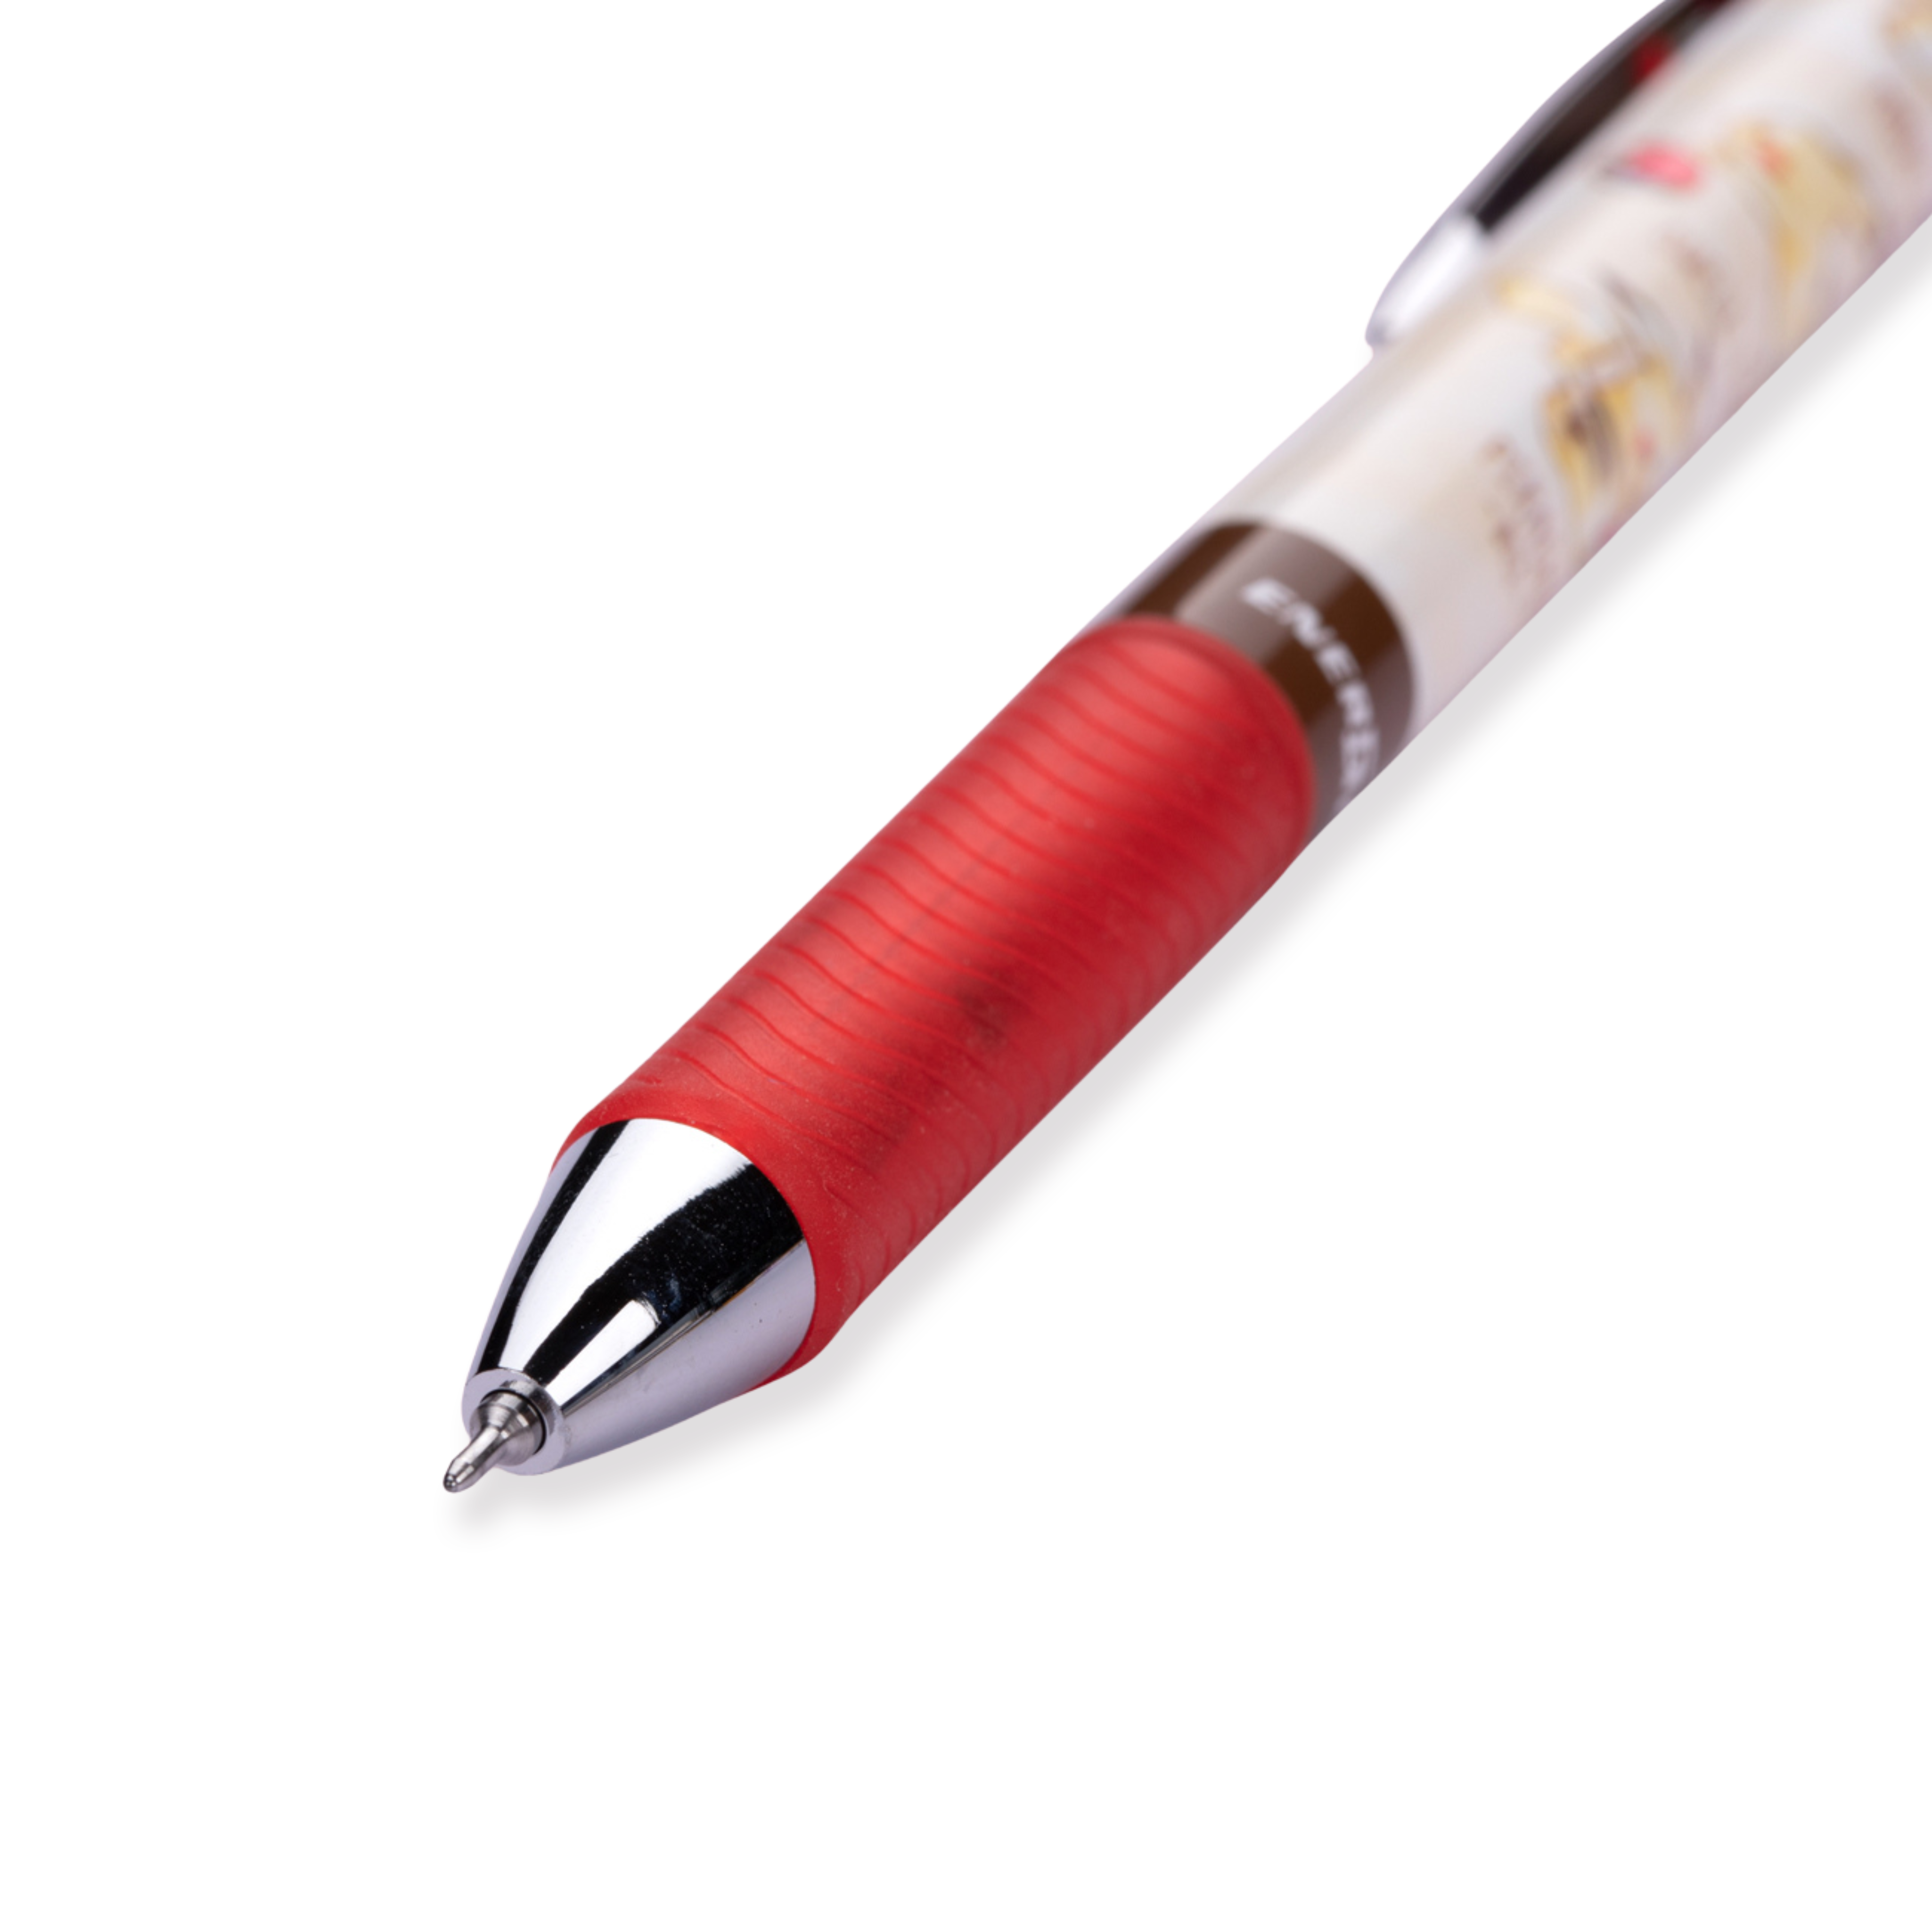 Pentel EnerGel Pikachu Gelstift in limitierter Auflage – 0,5 mm – schwarze Tinte – roter Griff